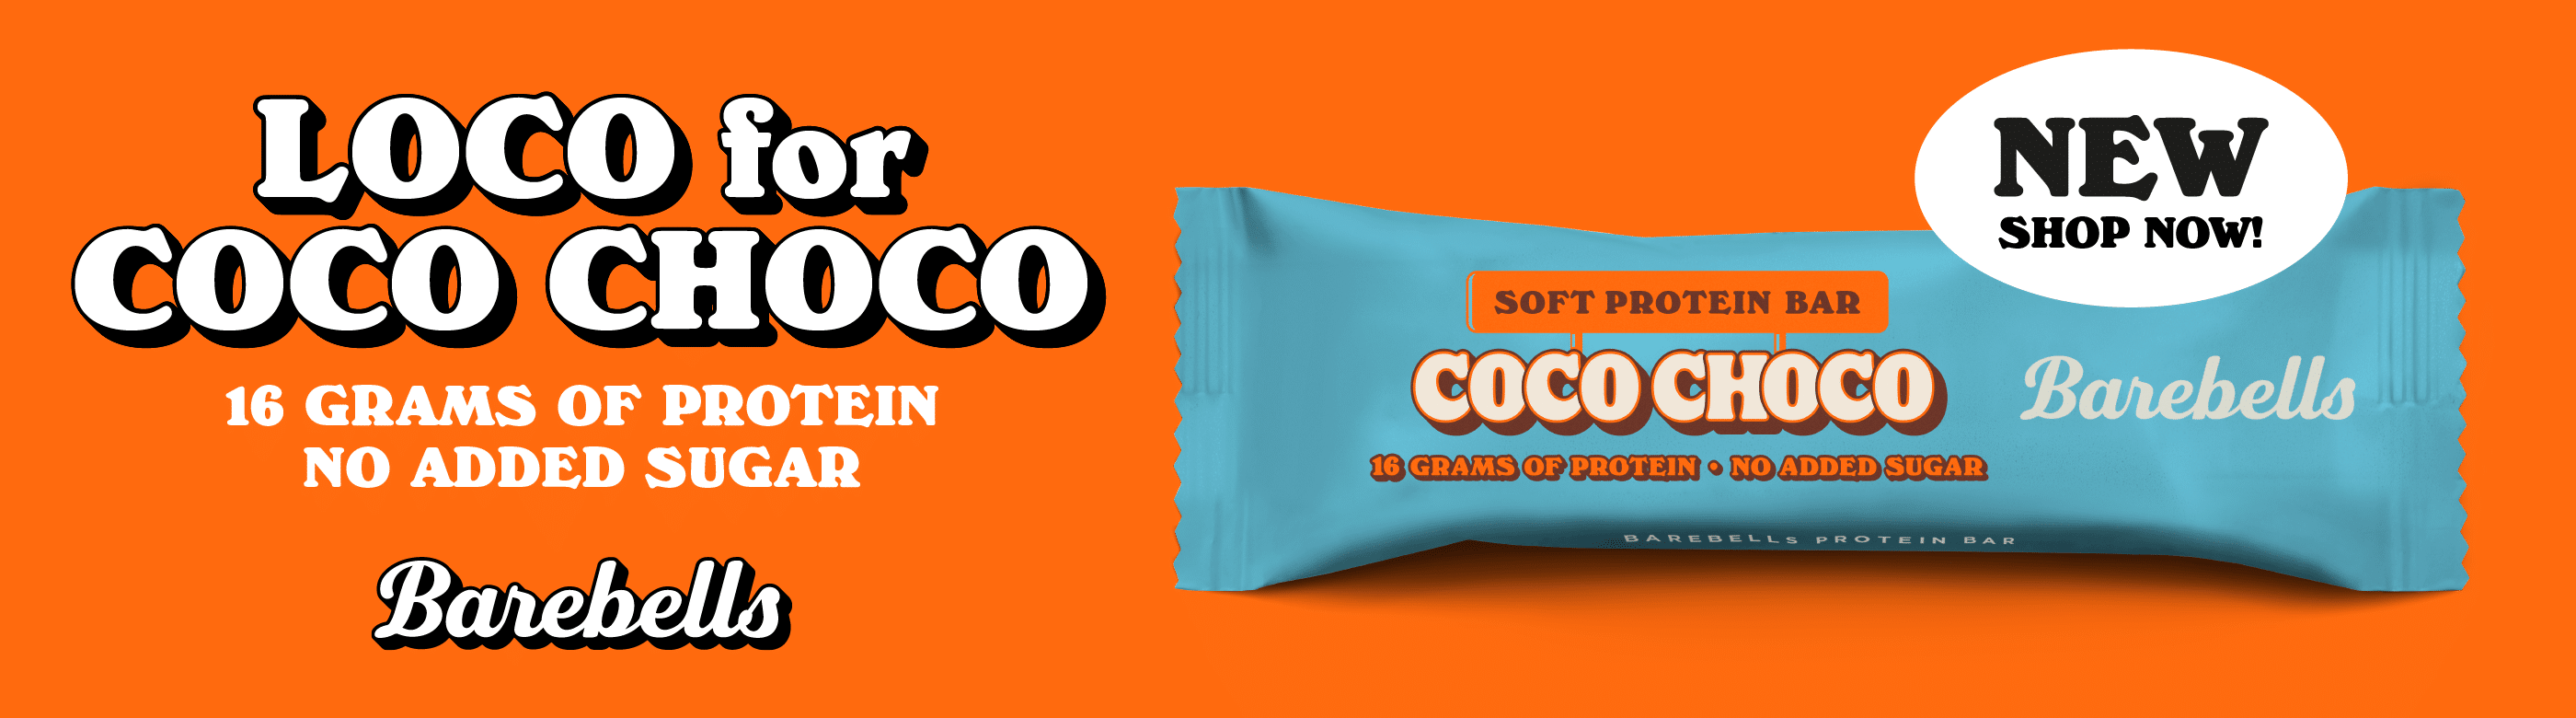 Coco Choco Softbar Barebells